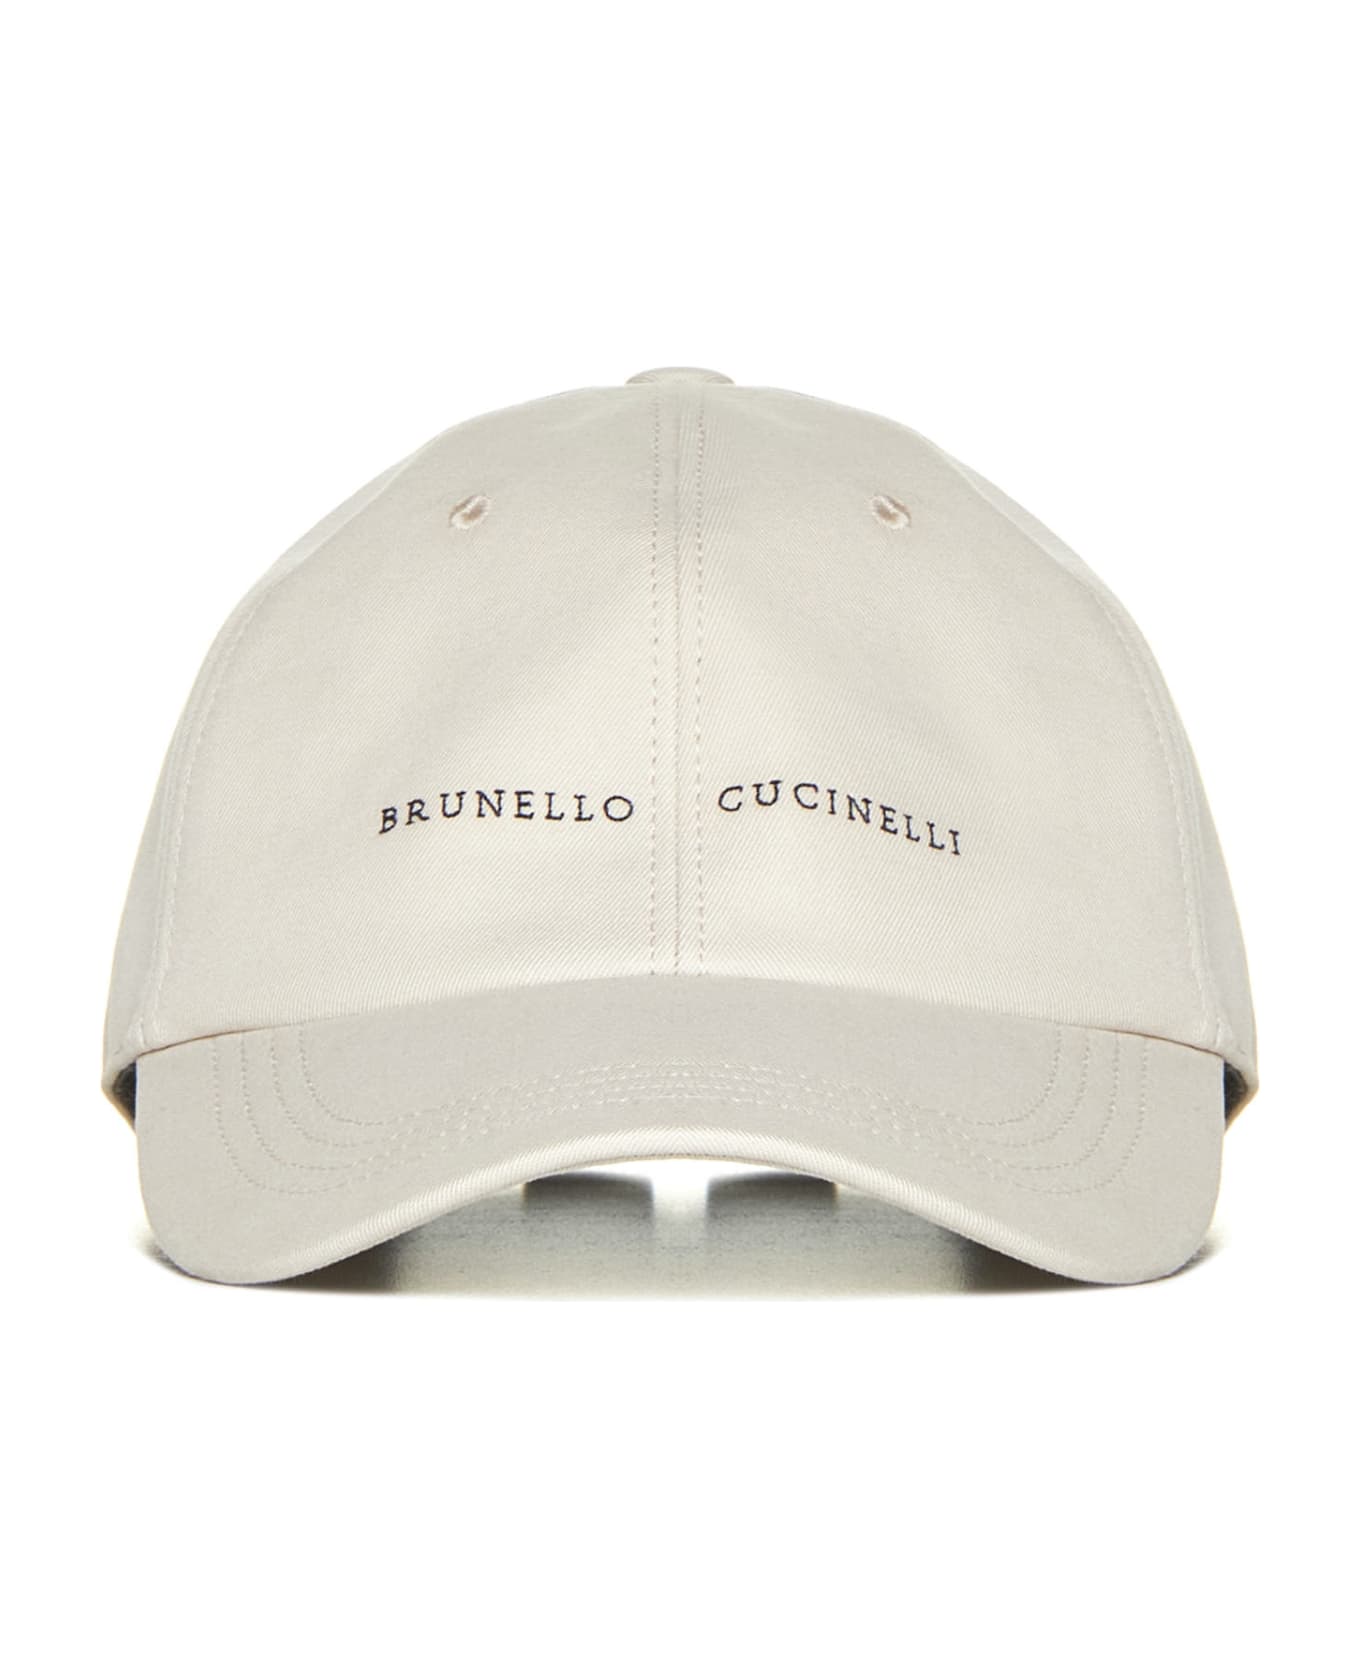 Brunello Cucinelli Embroidered Logo Baseball Cap - Oat